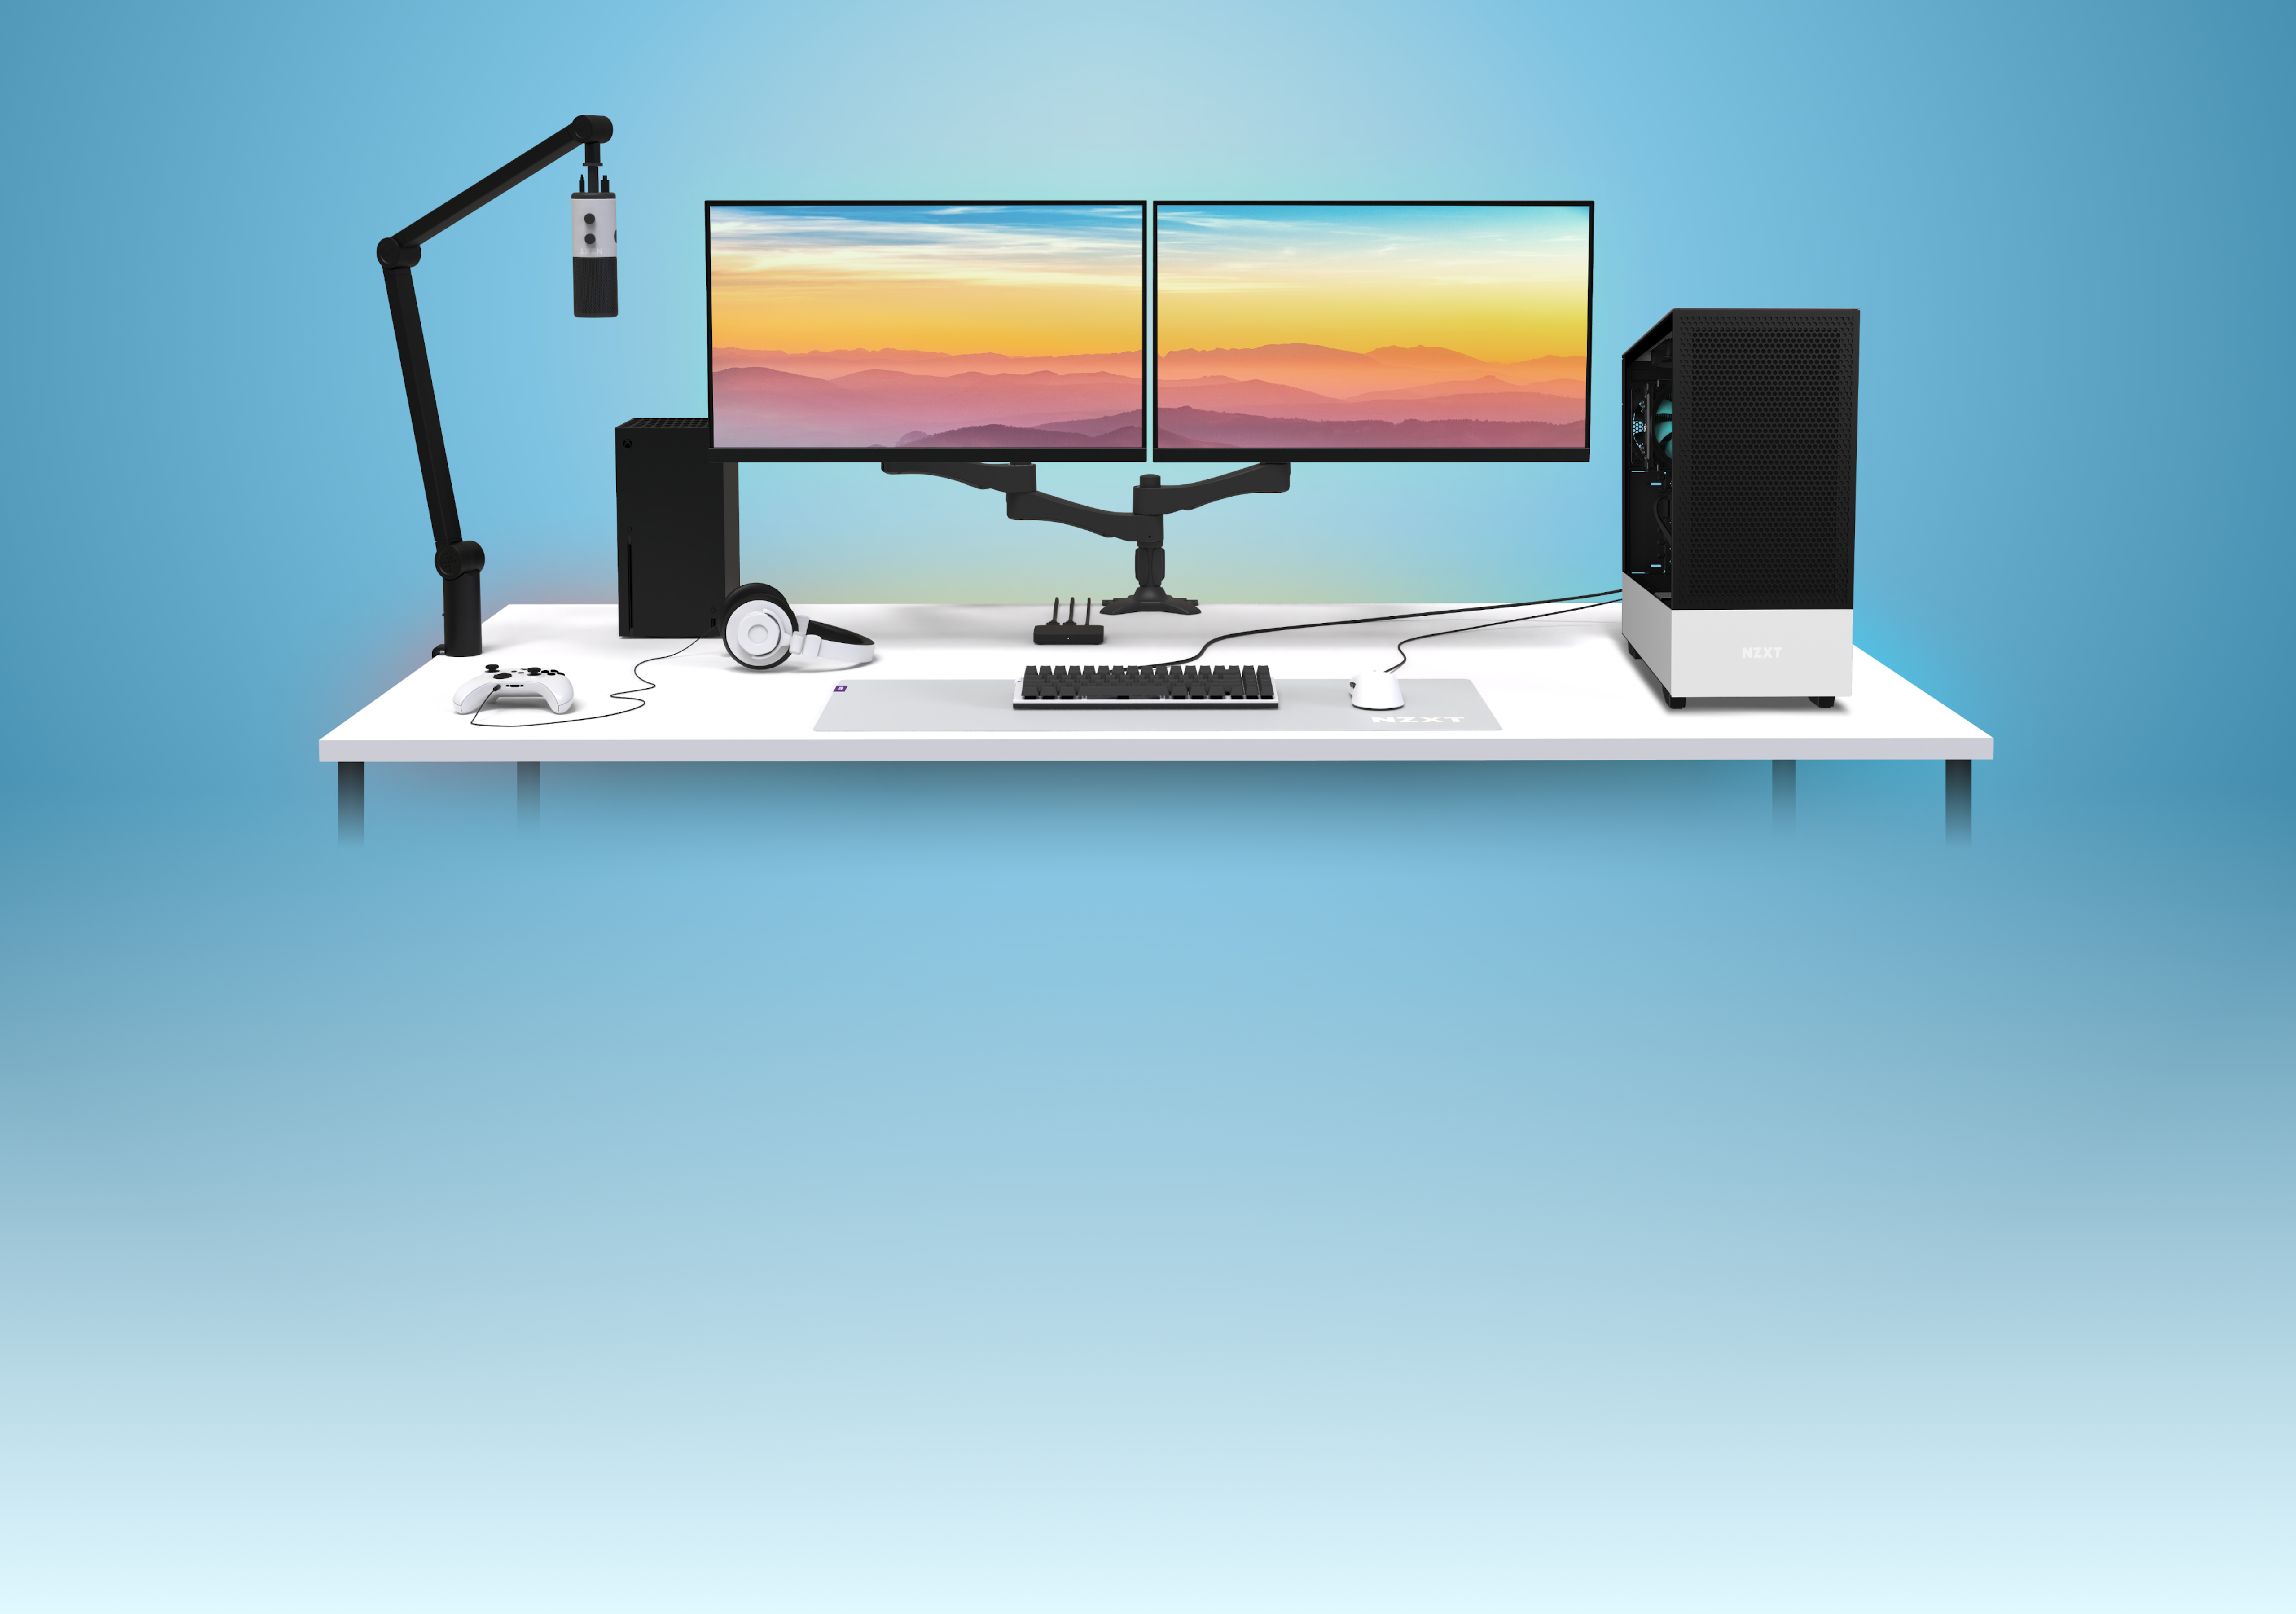 NZXT Gaming Desktop Setup with a blue brackground